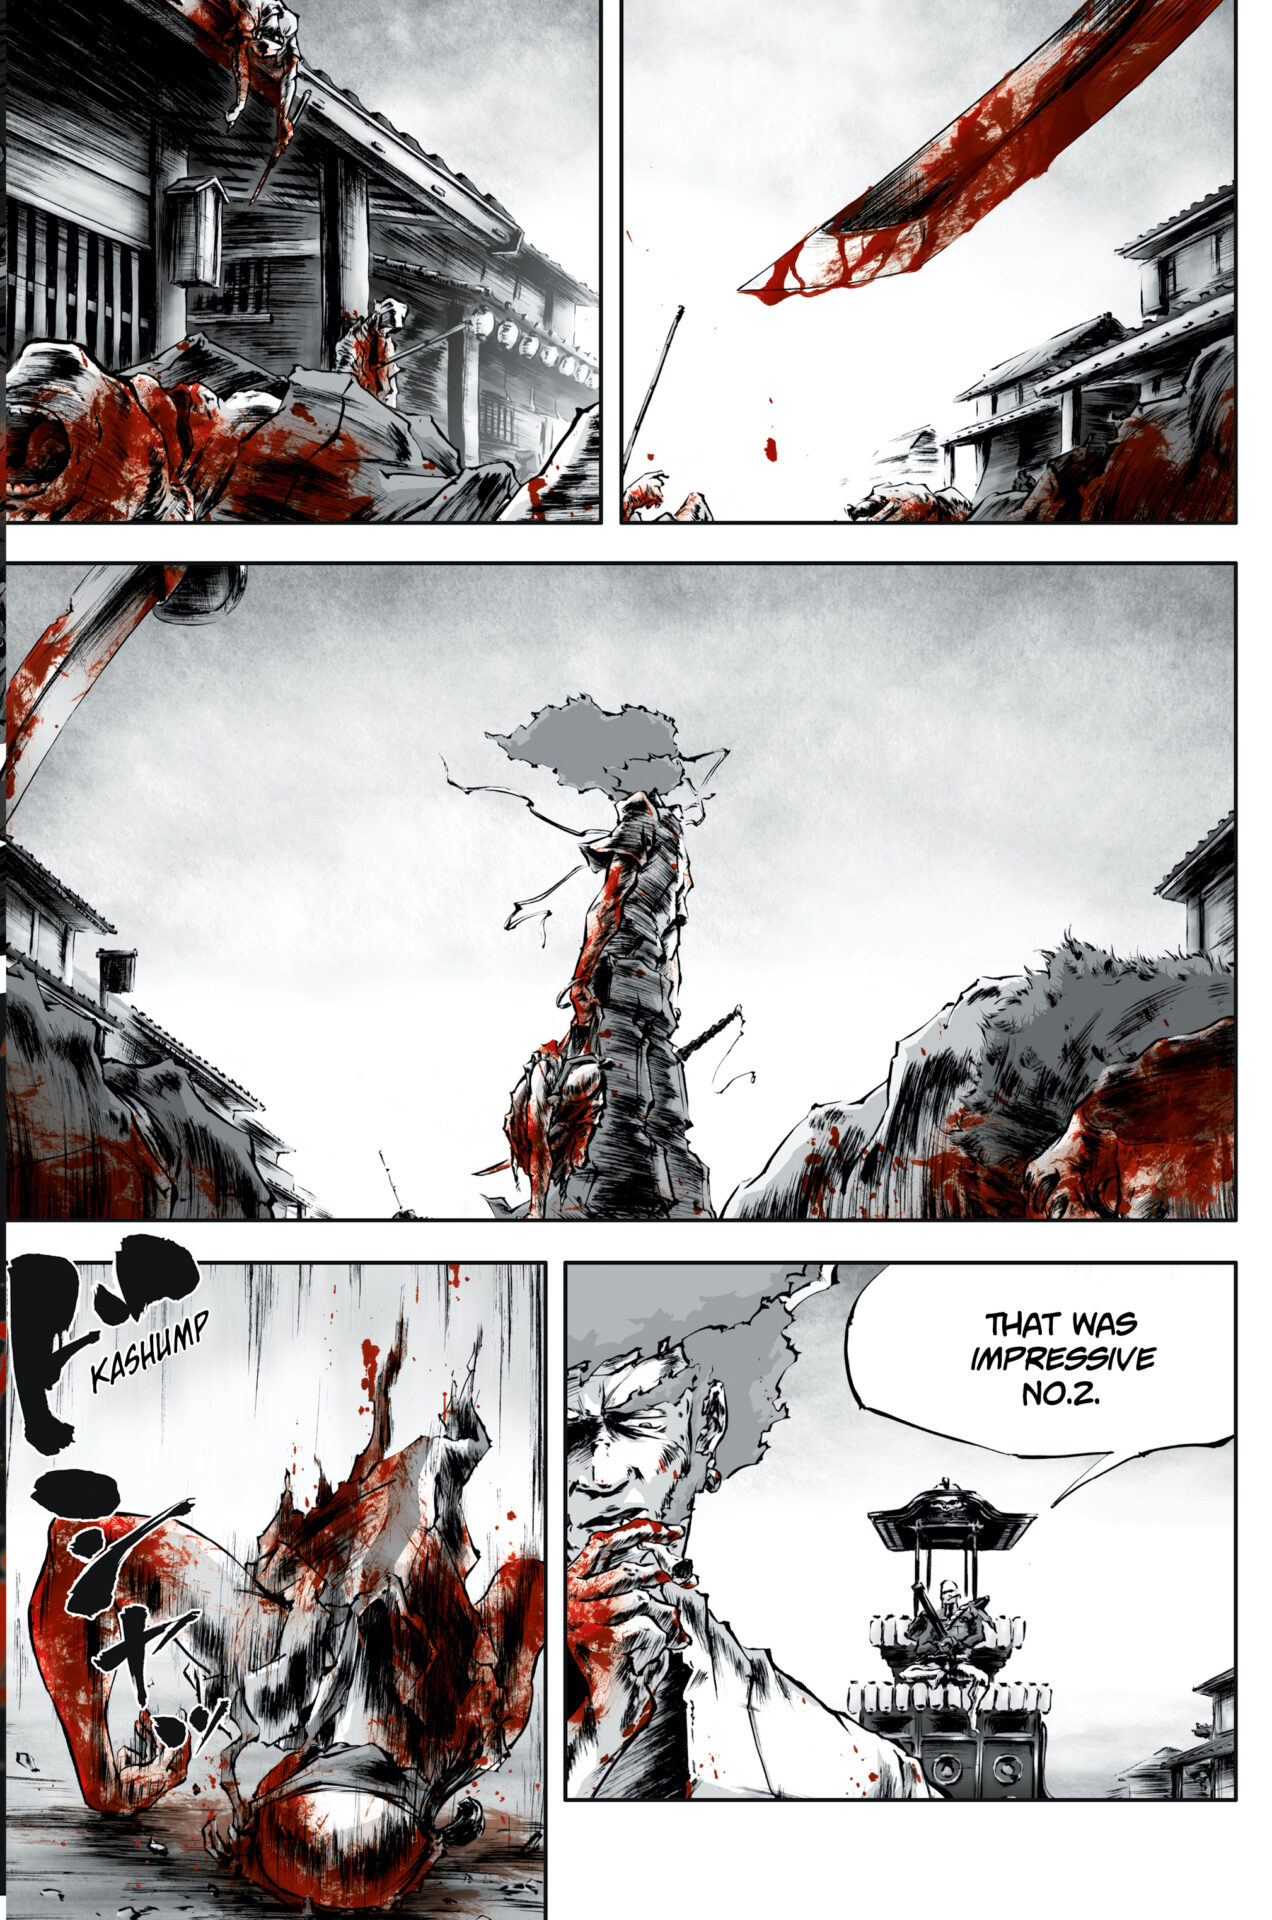 Afro Samurai Volume #1 Graphic Novel By Takashi Okazaki Getting A Limited  Foil Variant –